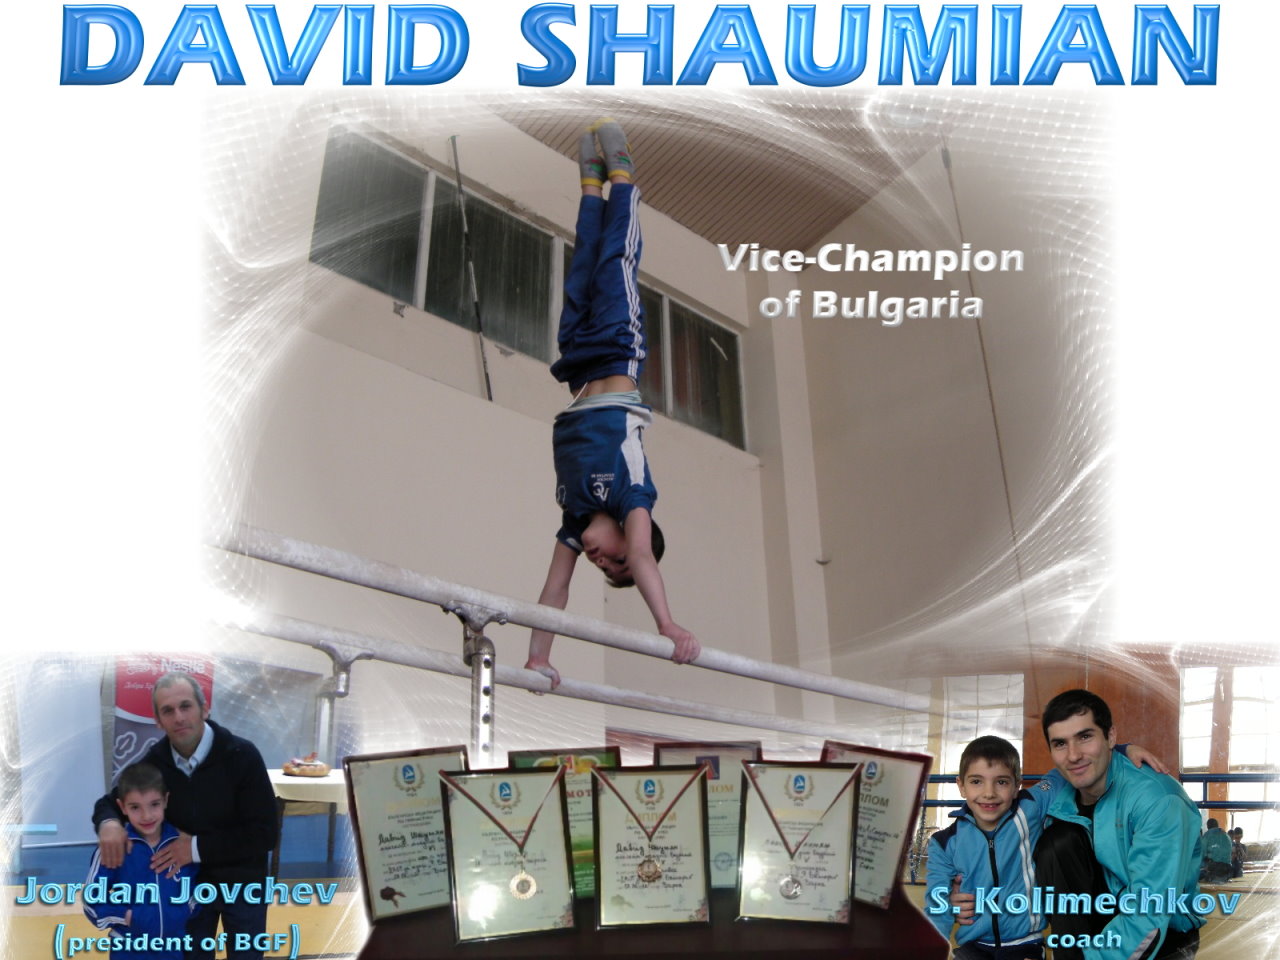 David Shaumian - Vice-Champion of Bulgaria